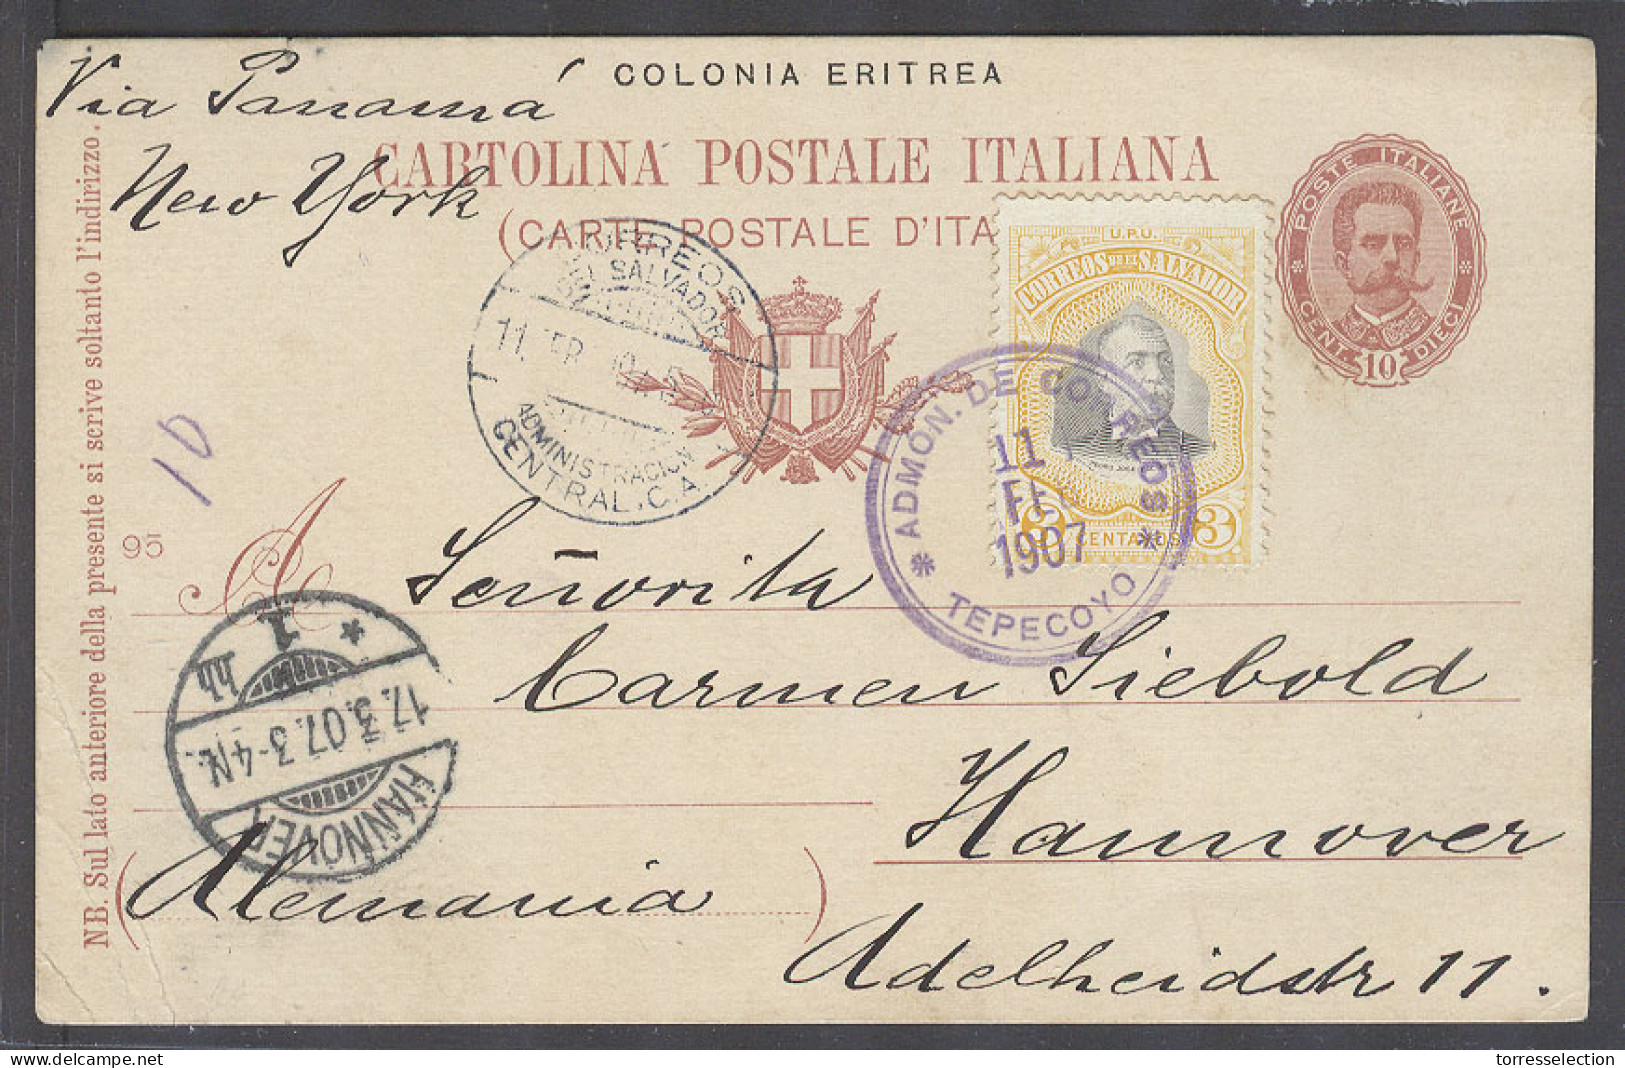 SALVADOR, EL. 1907 (11 Feb). Tepecoyo - Germany (17 March). Italy Eritrea Stat Ovptd Card Fkd At This Village. VF Nice M - Salvador